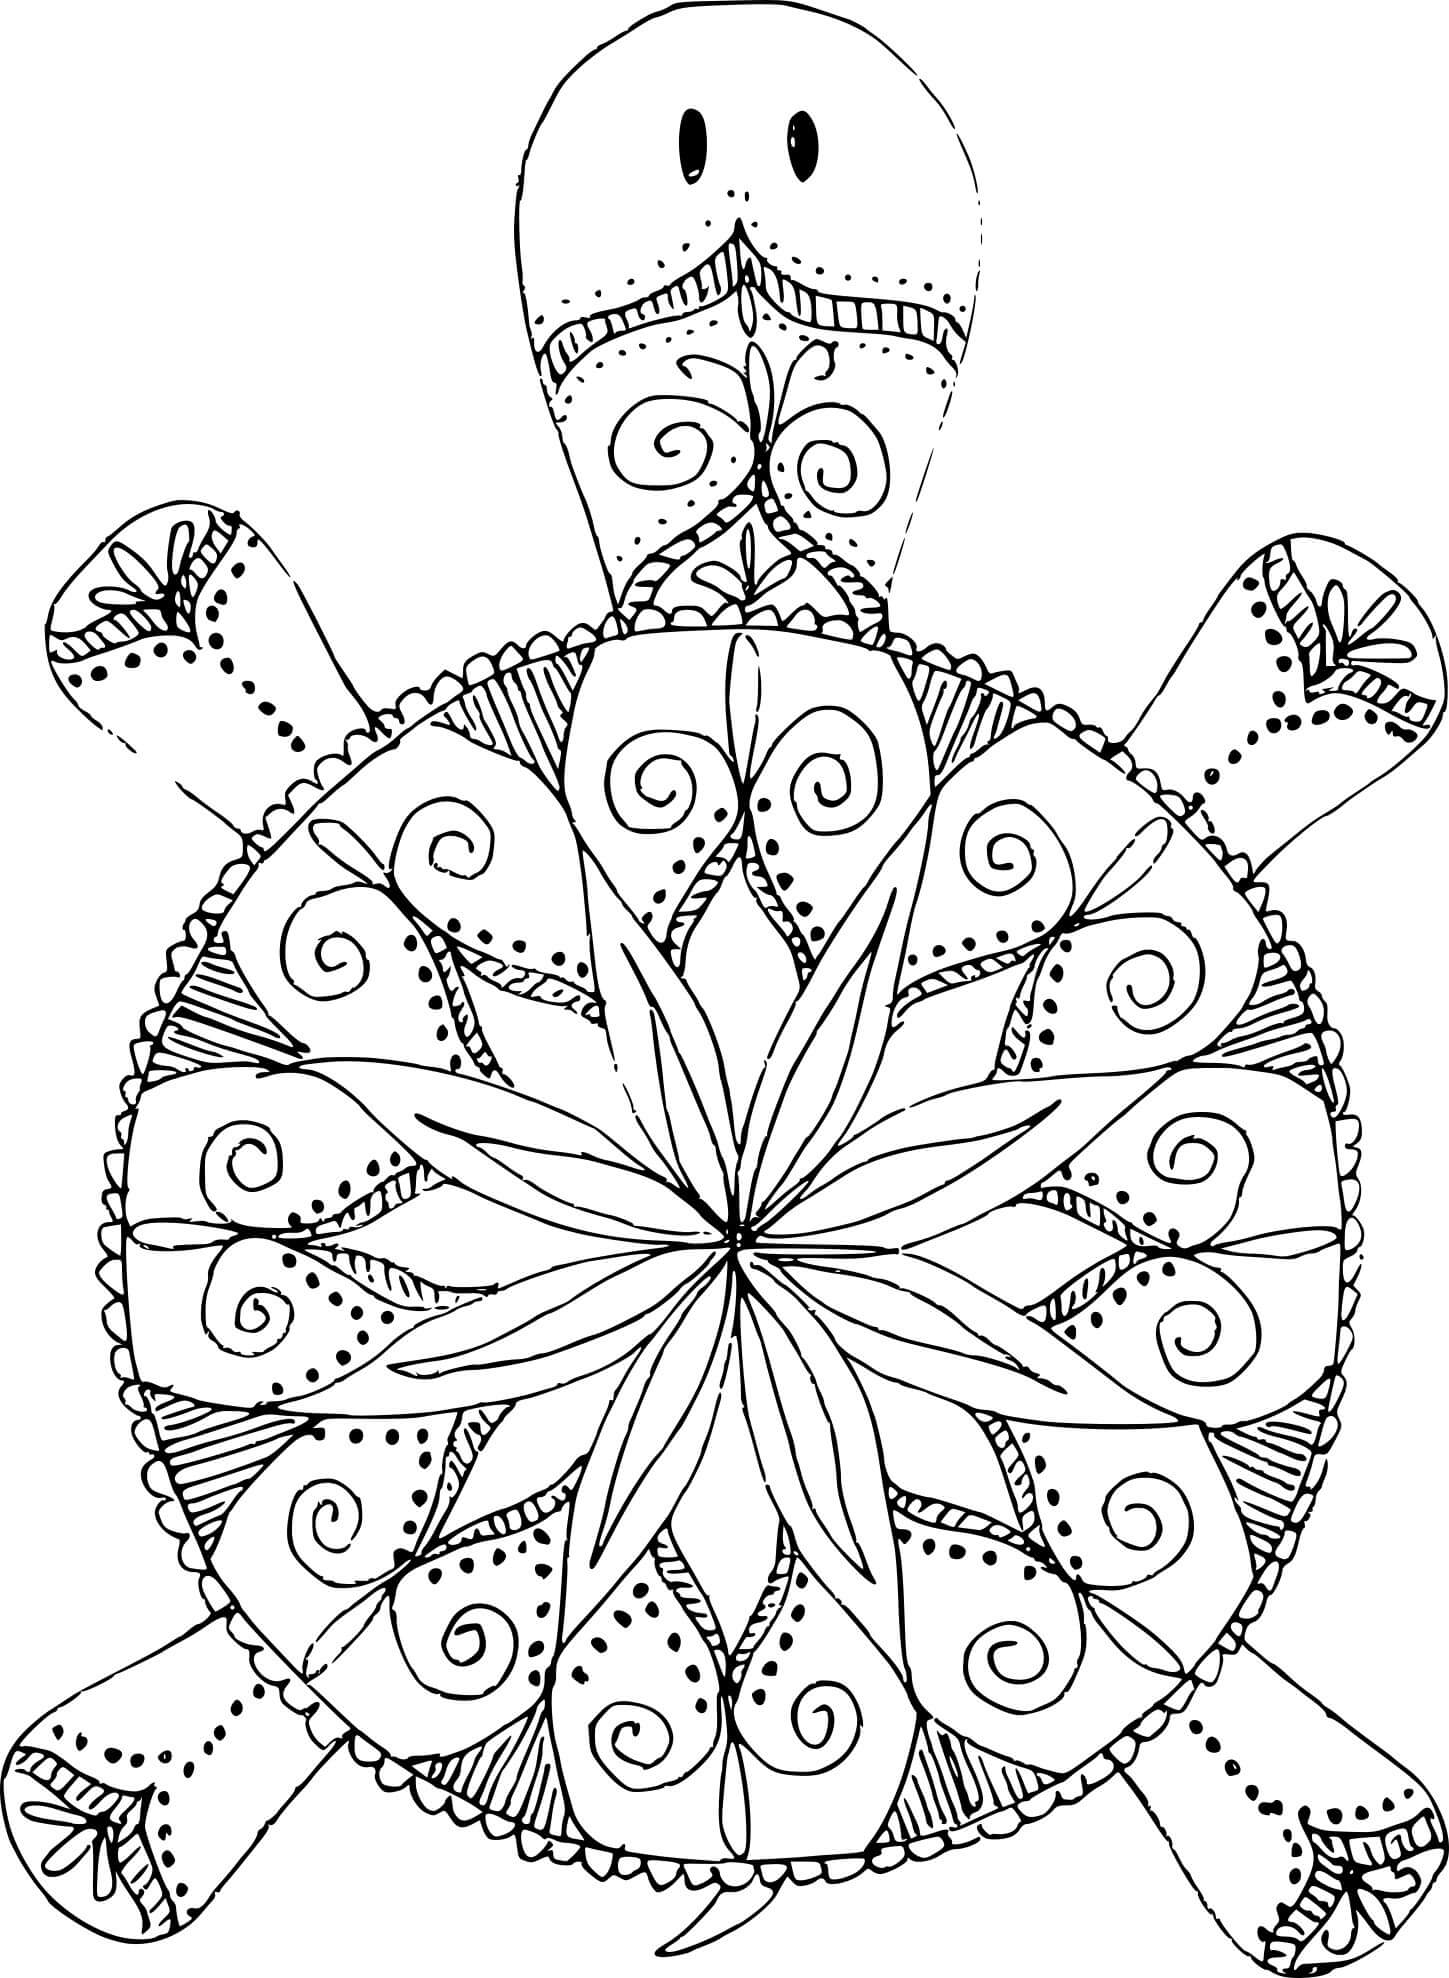 Mandala Turtle Coloring Page - Sheet 8 Mandalas